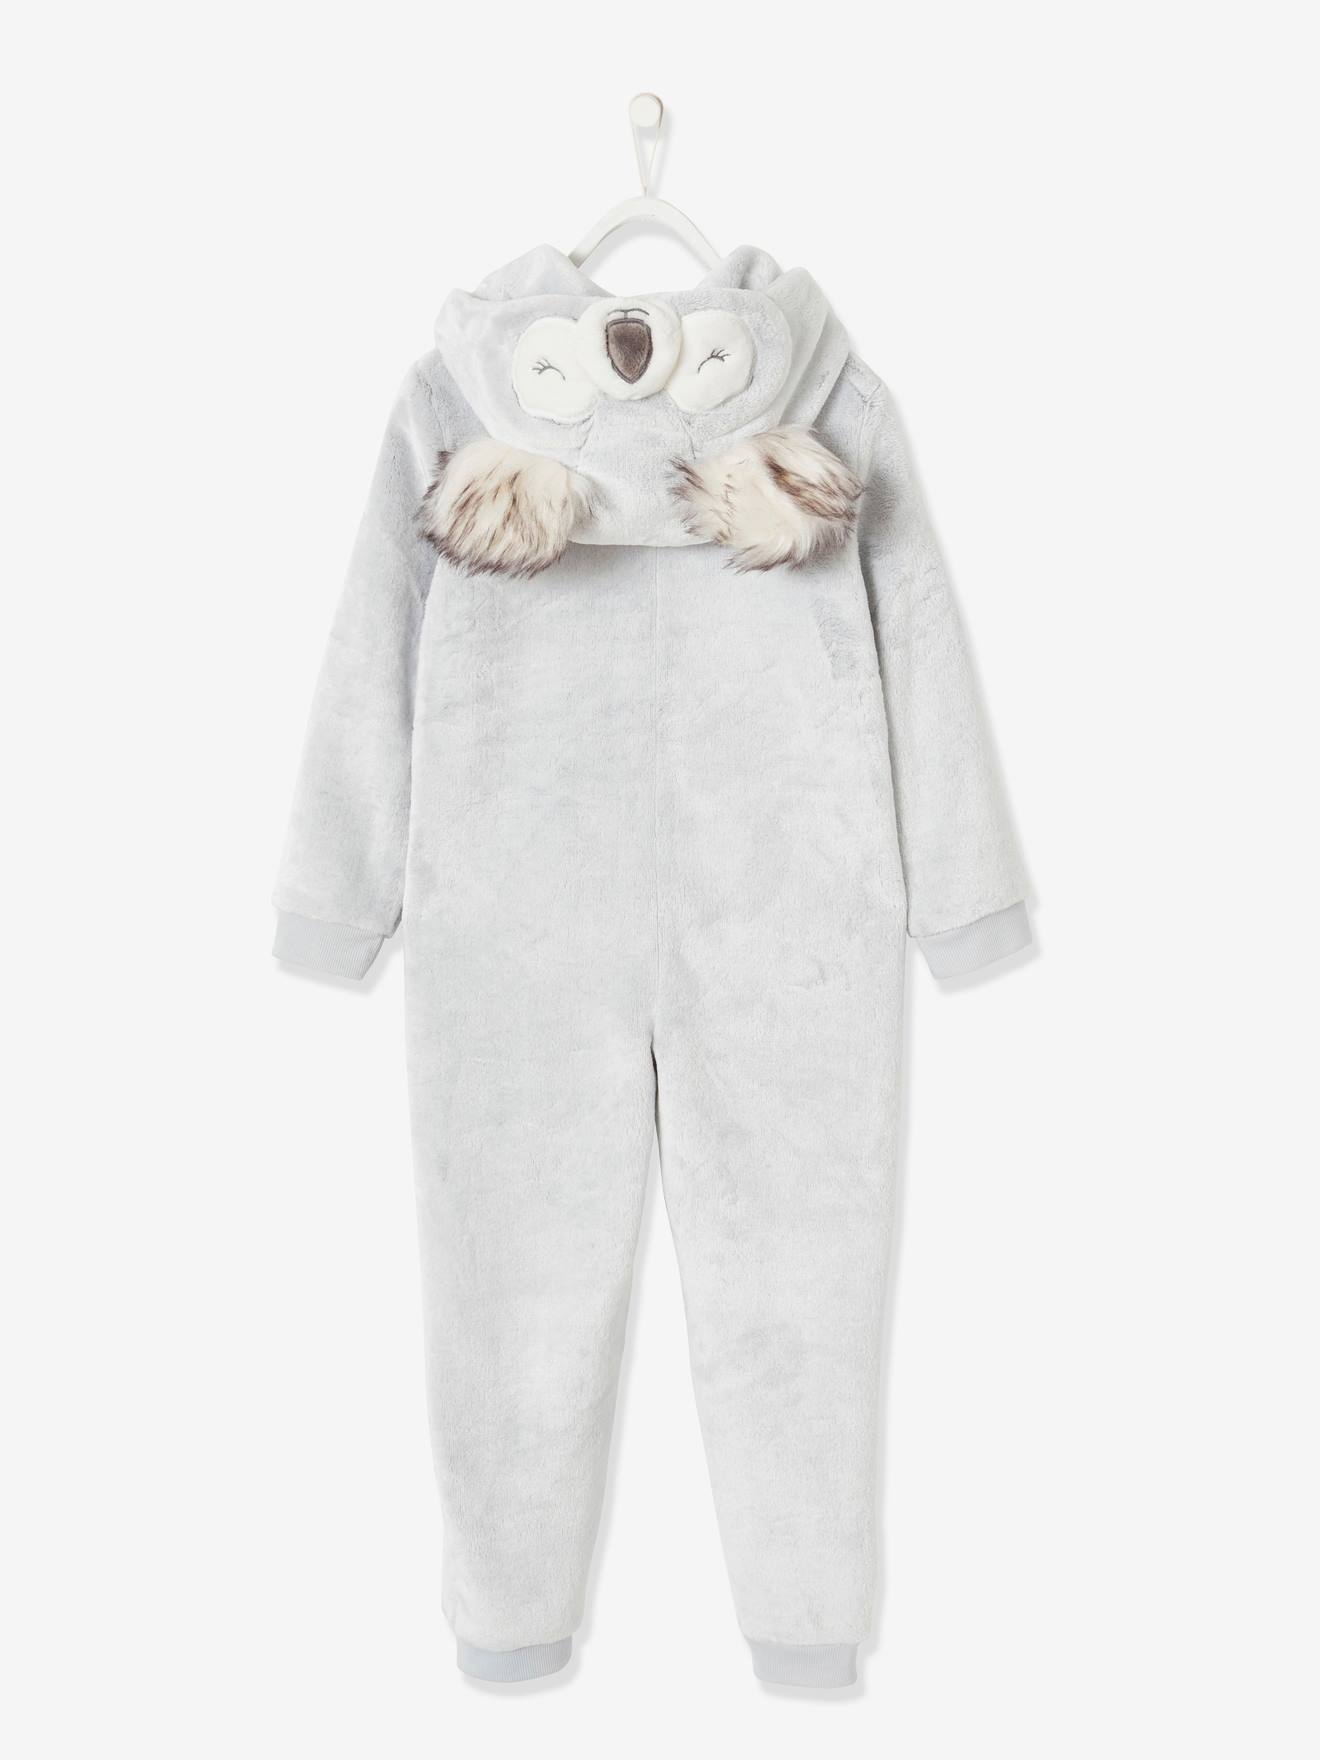 Combinaison Pyjama Koala Bébé, Animaux